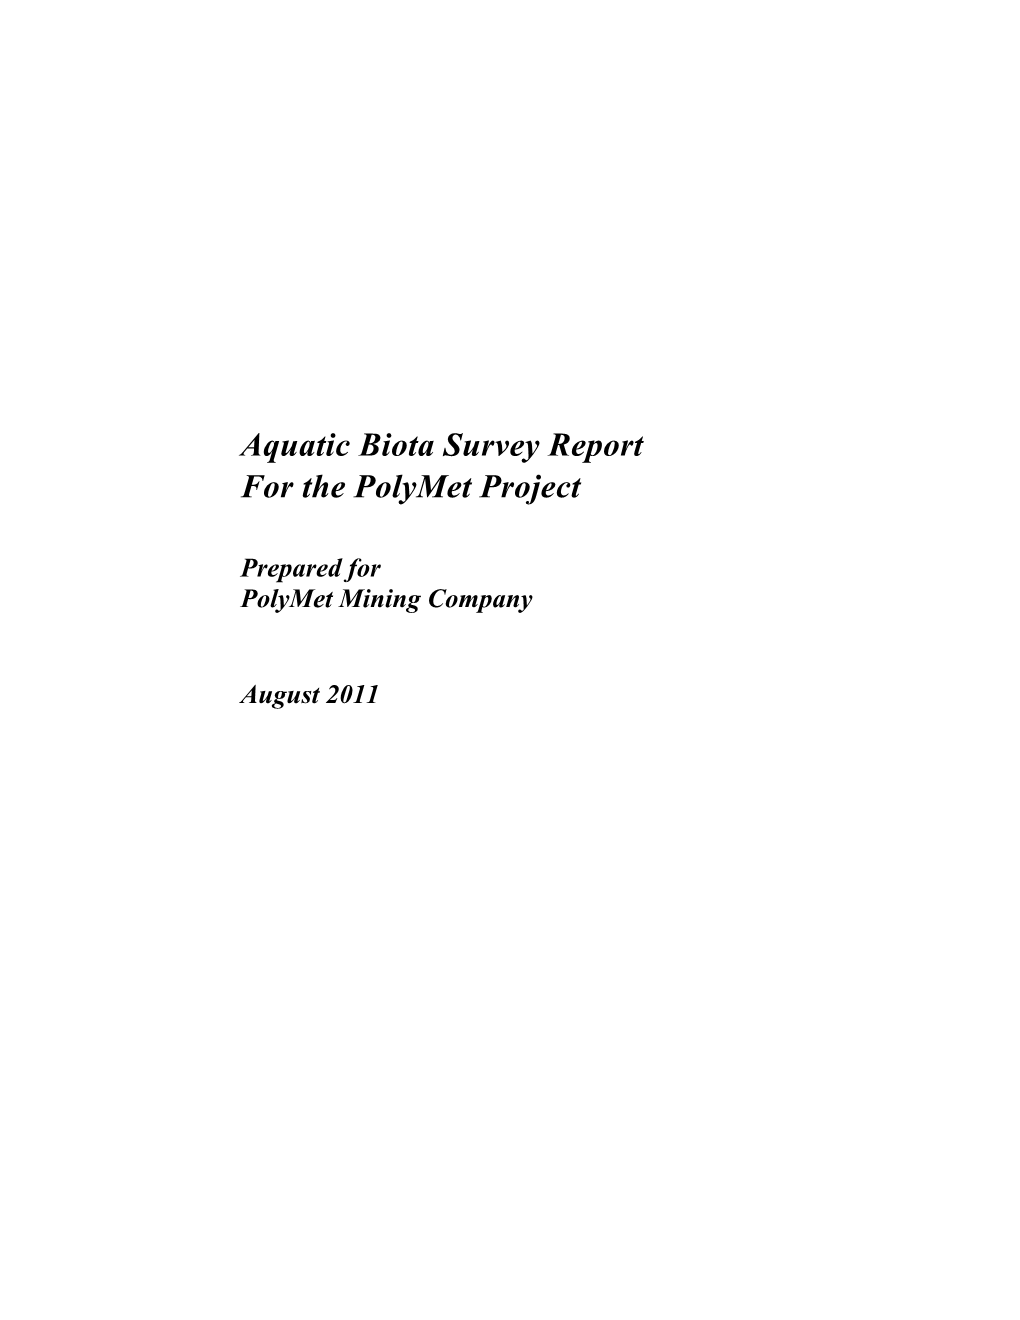 Aquatic Biota Survey Report for the Polymet Project